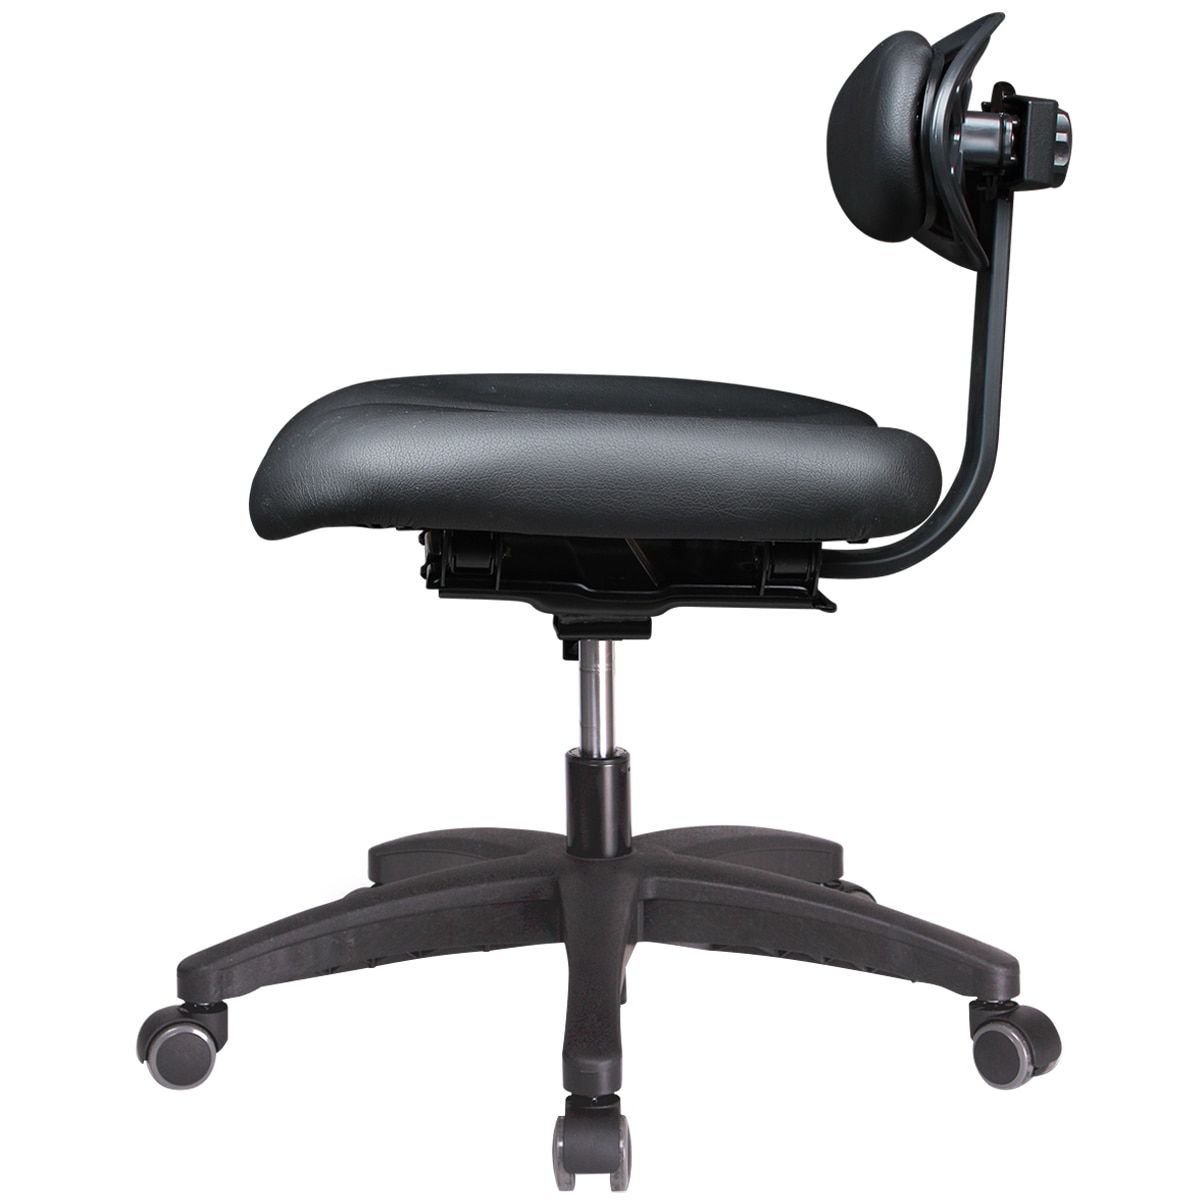 Hara Chair D Type Office Chair - Black